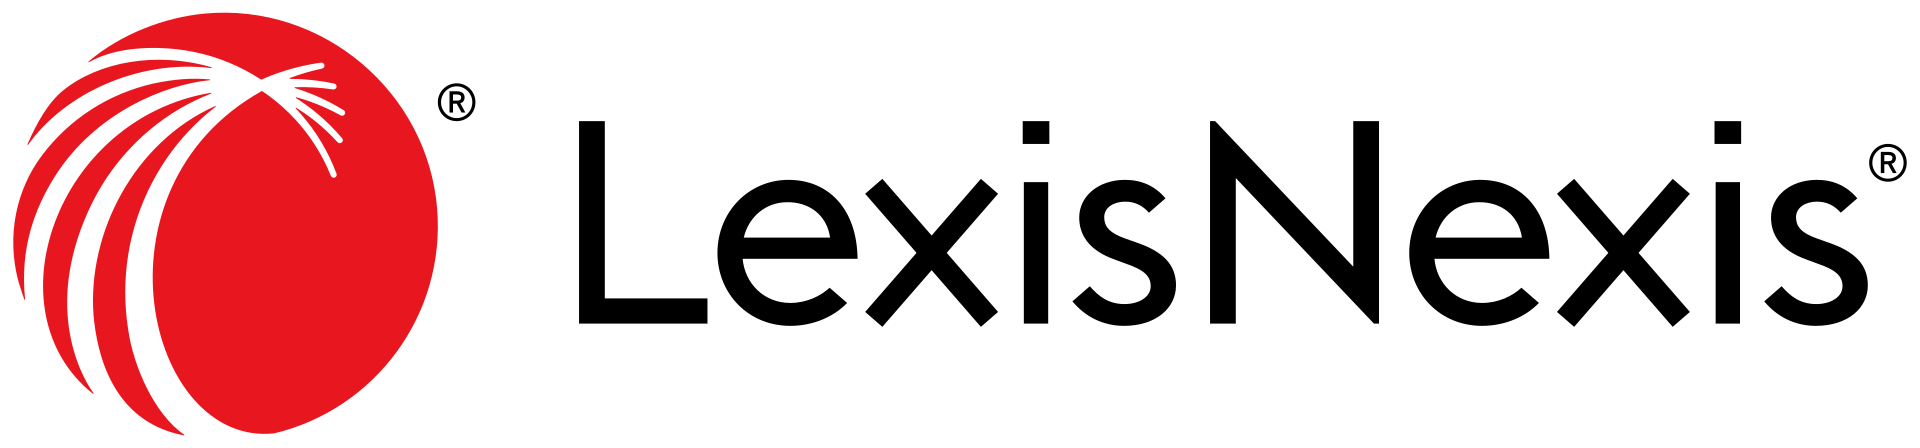 LexisNexis Brand Logo